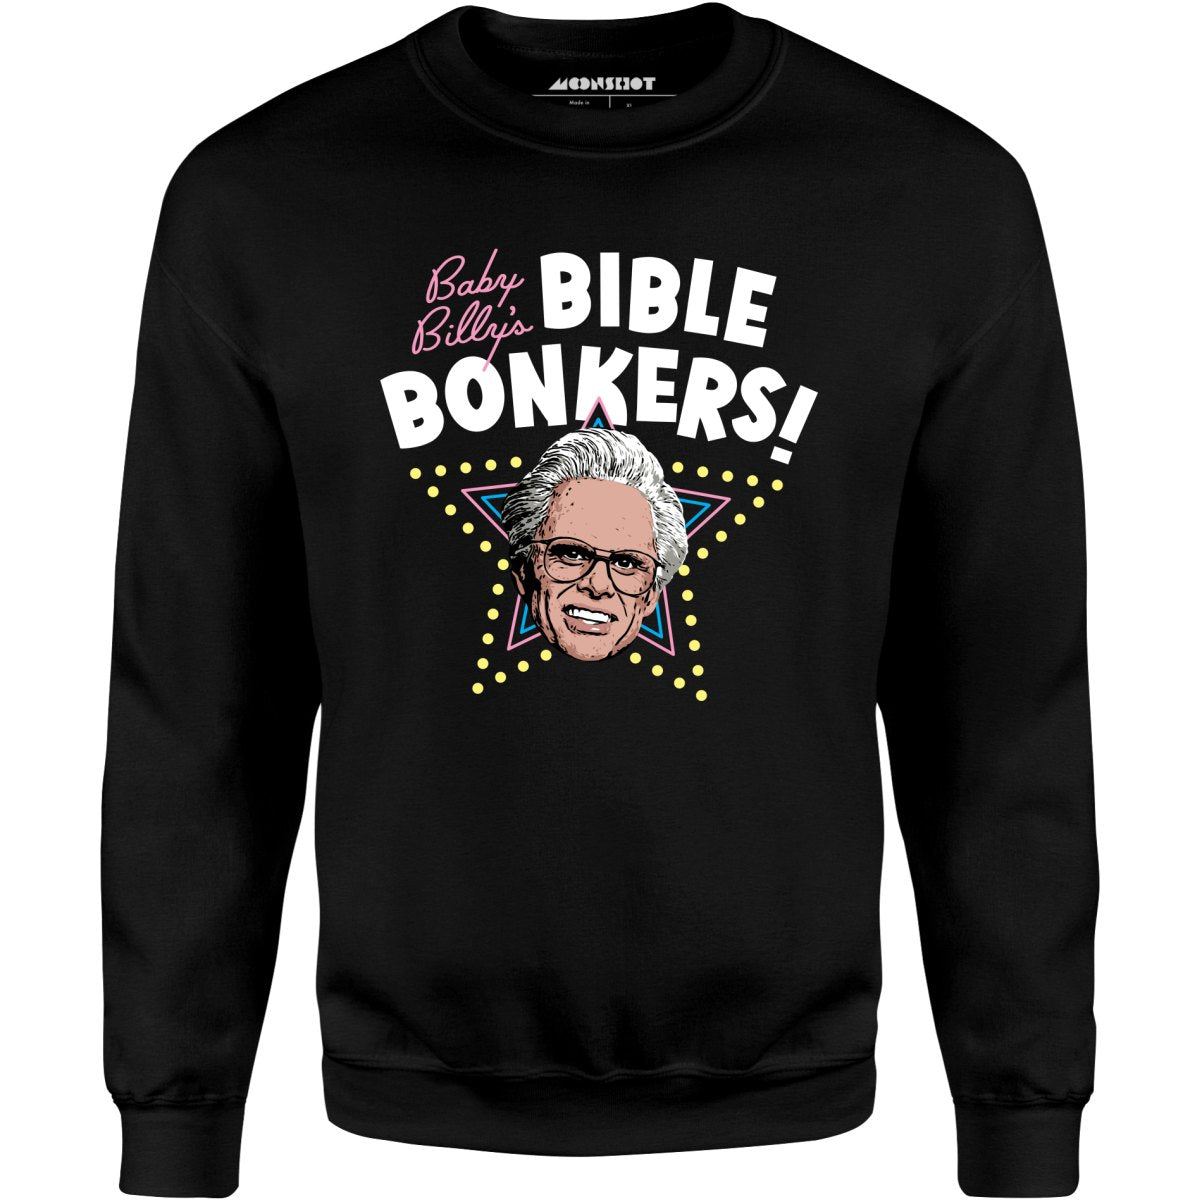 Baby Billy's Bible Bonkers - Unisex Sweatshirt